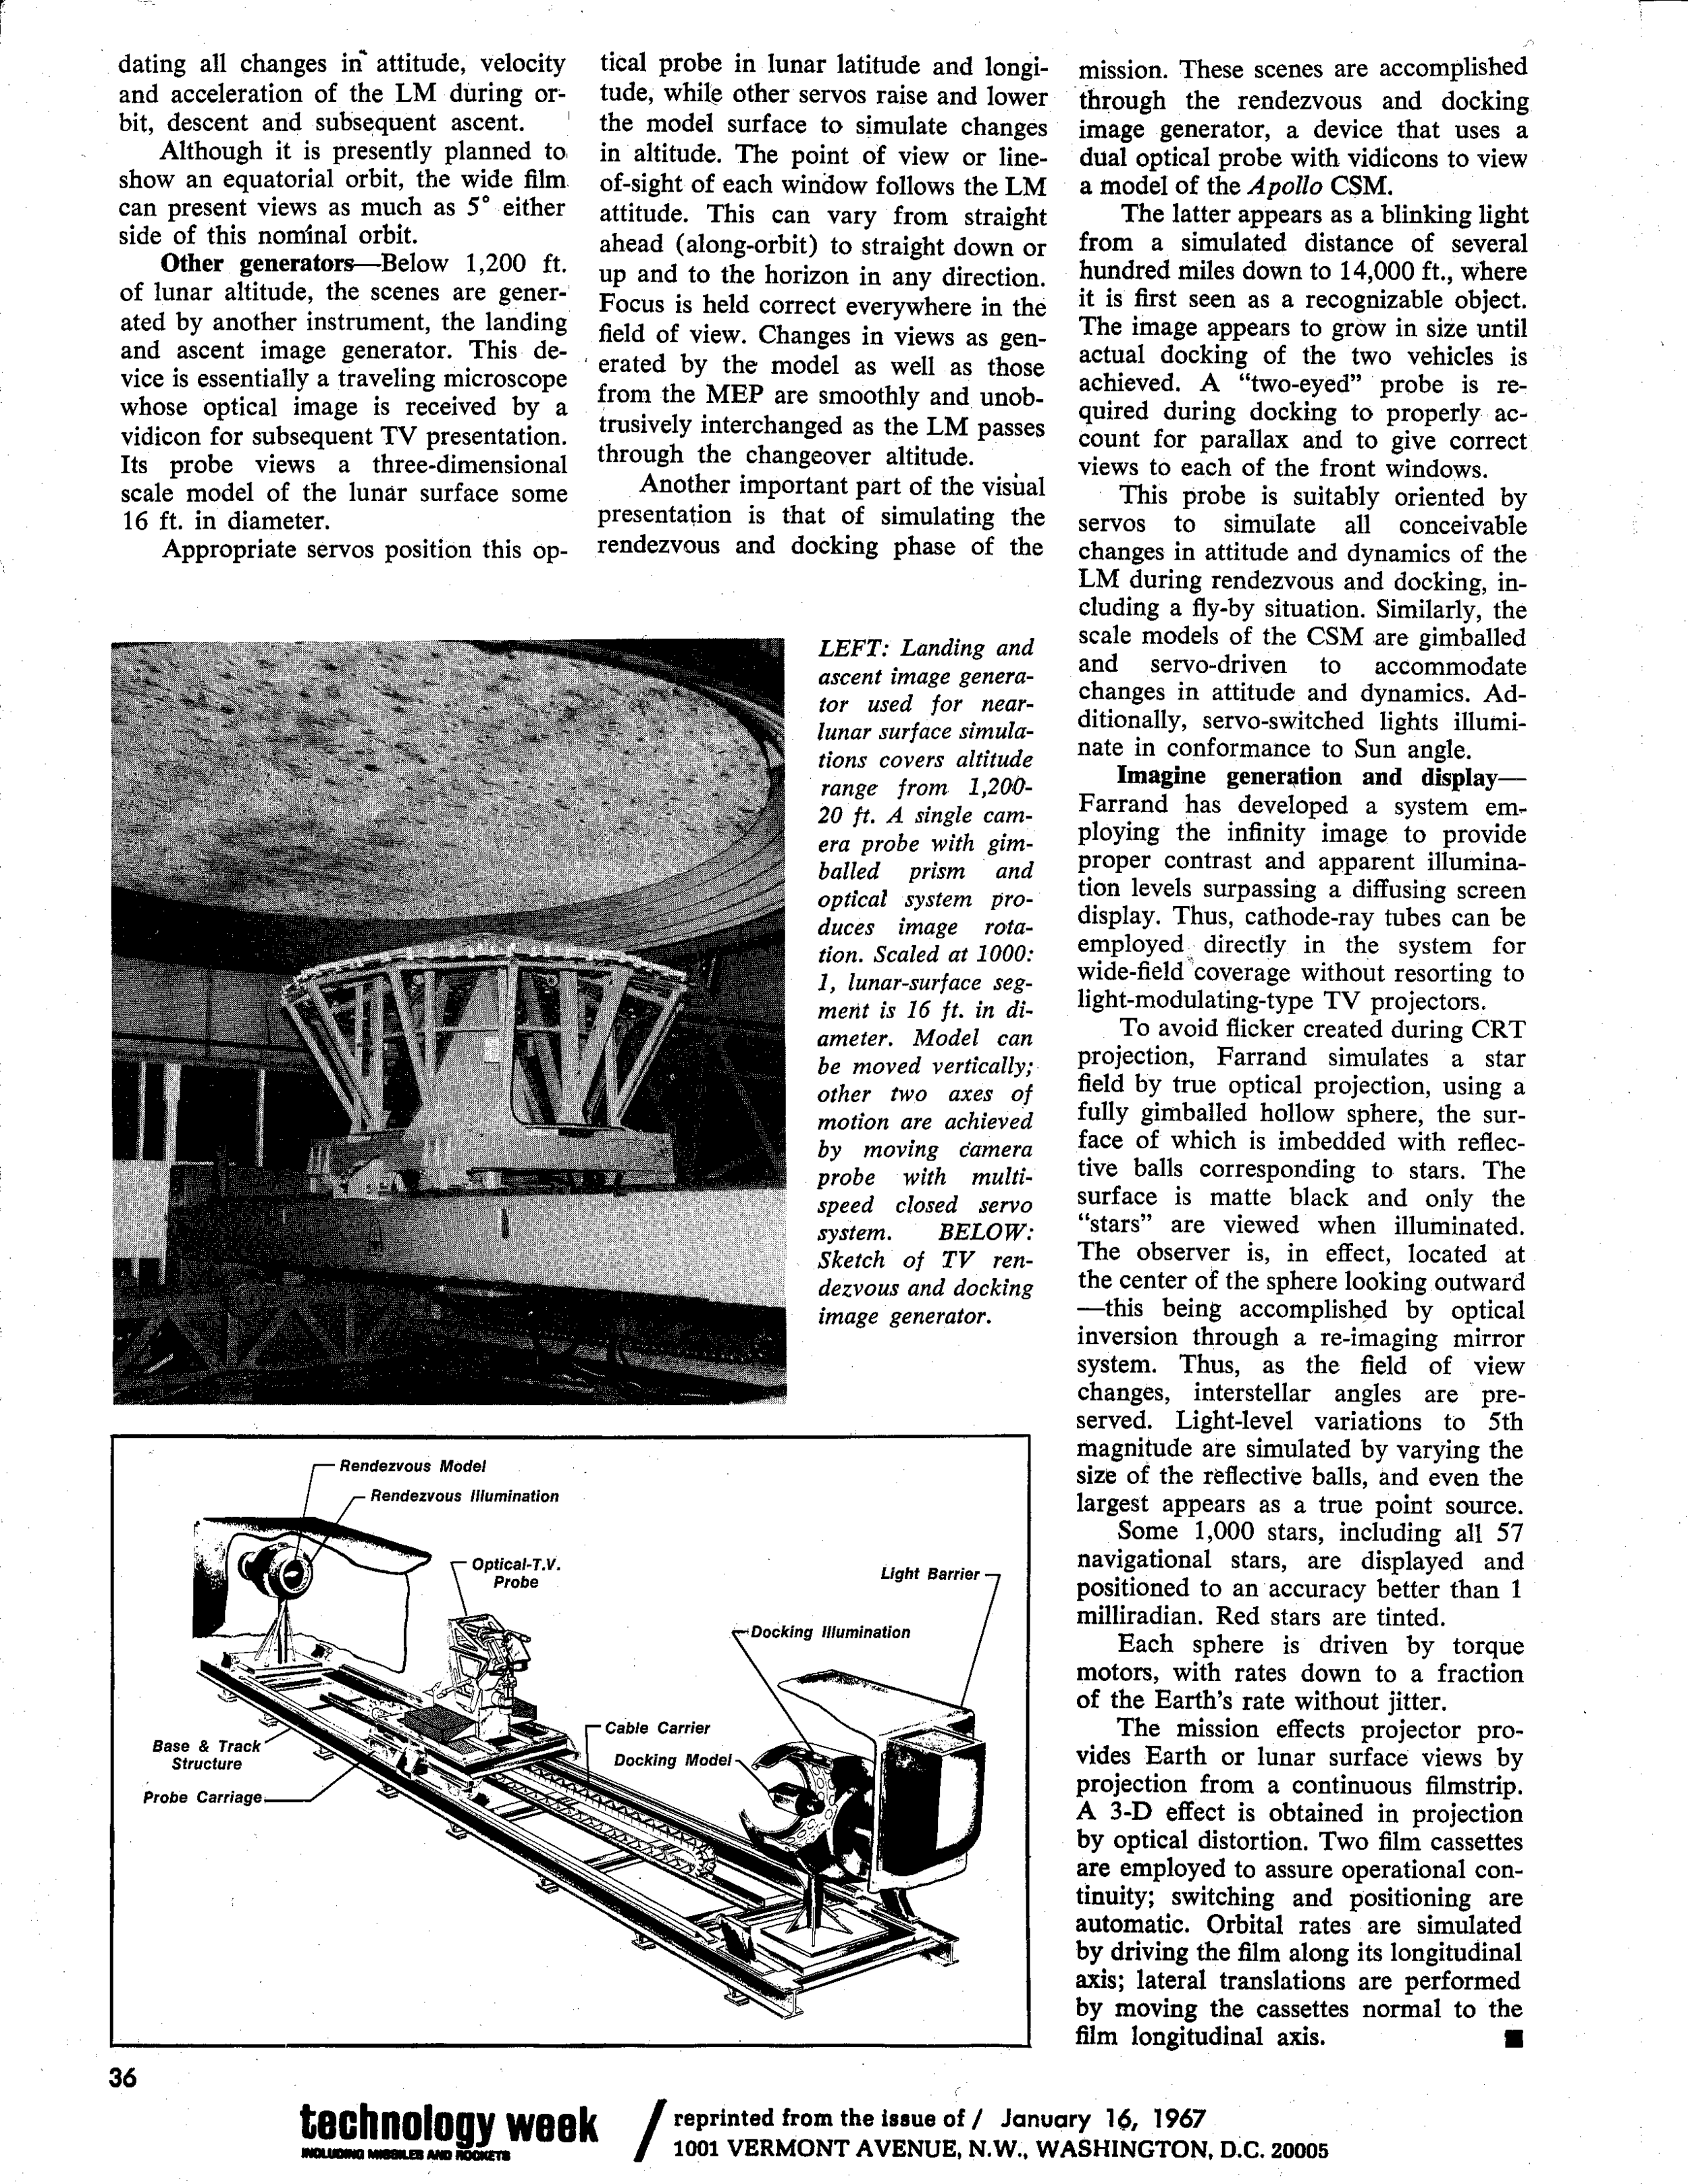 1967-01-12   Technology Week LMS Optics_Page_2.png